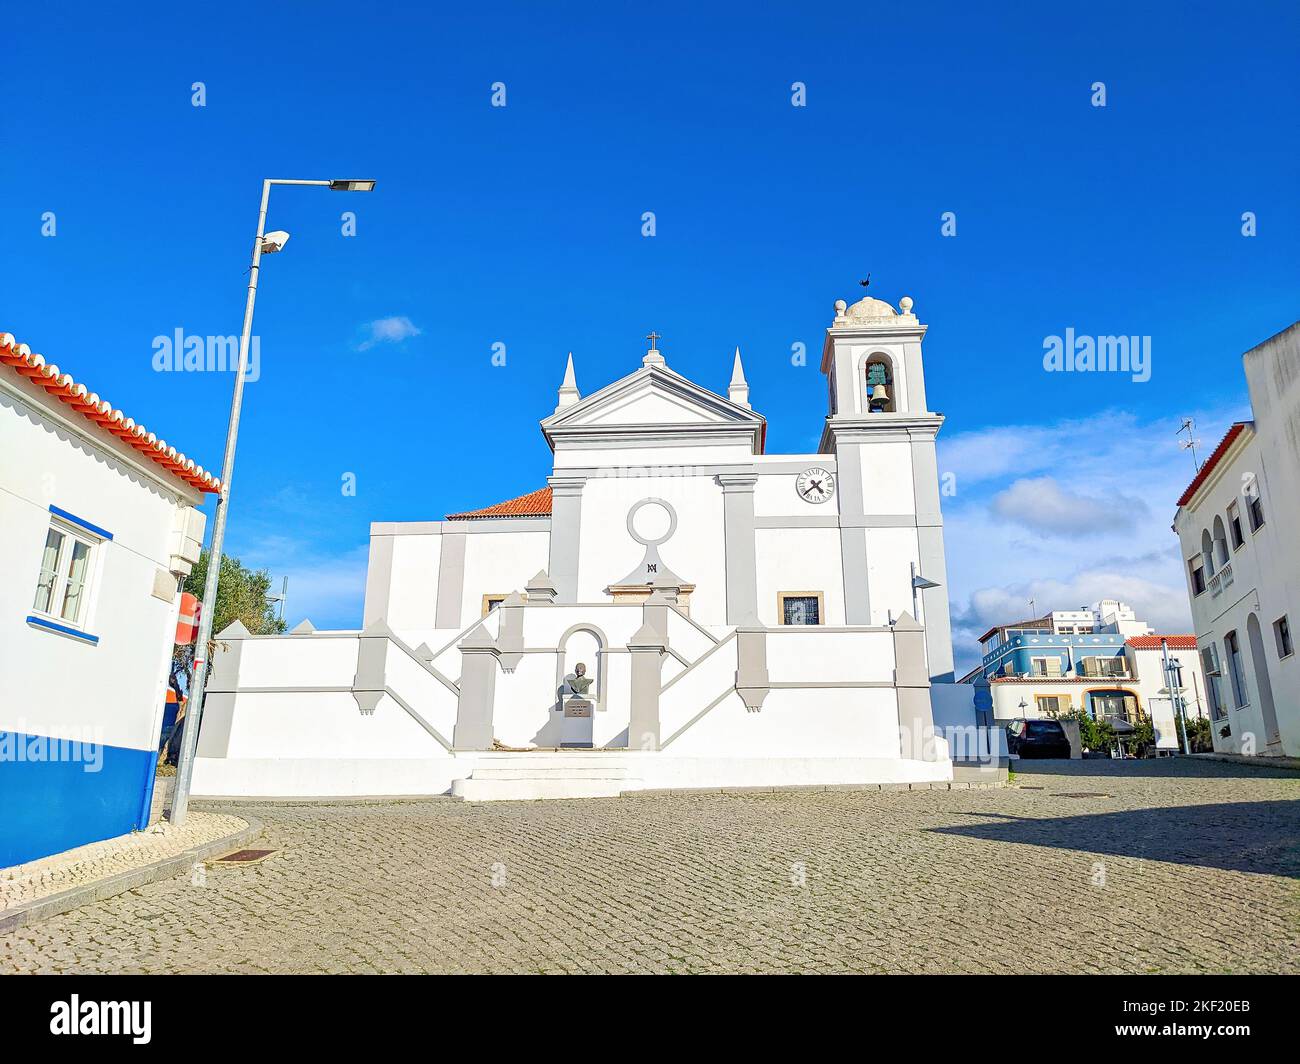 Sunny street, typical Algarve architecture, Igreja de Misericordia, Aljezur, Portugal Stock Photo